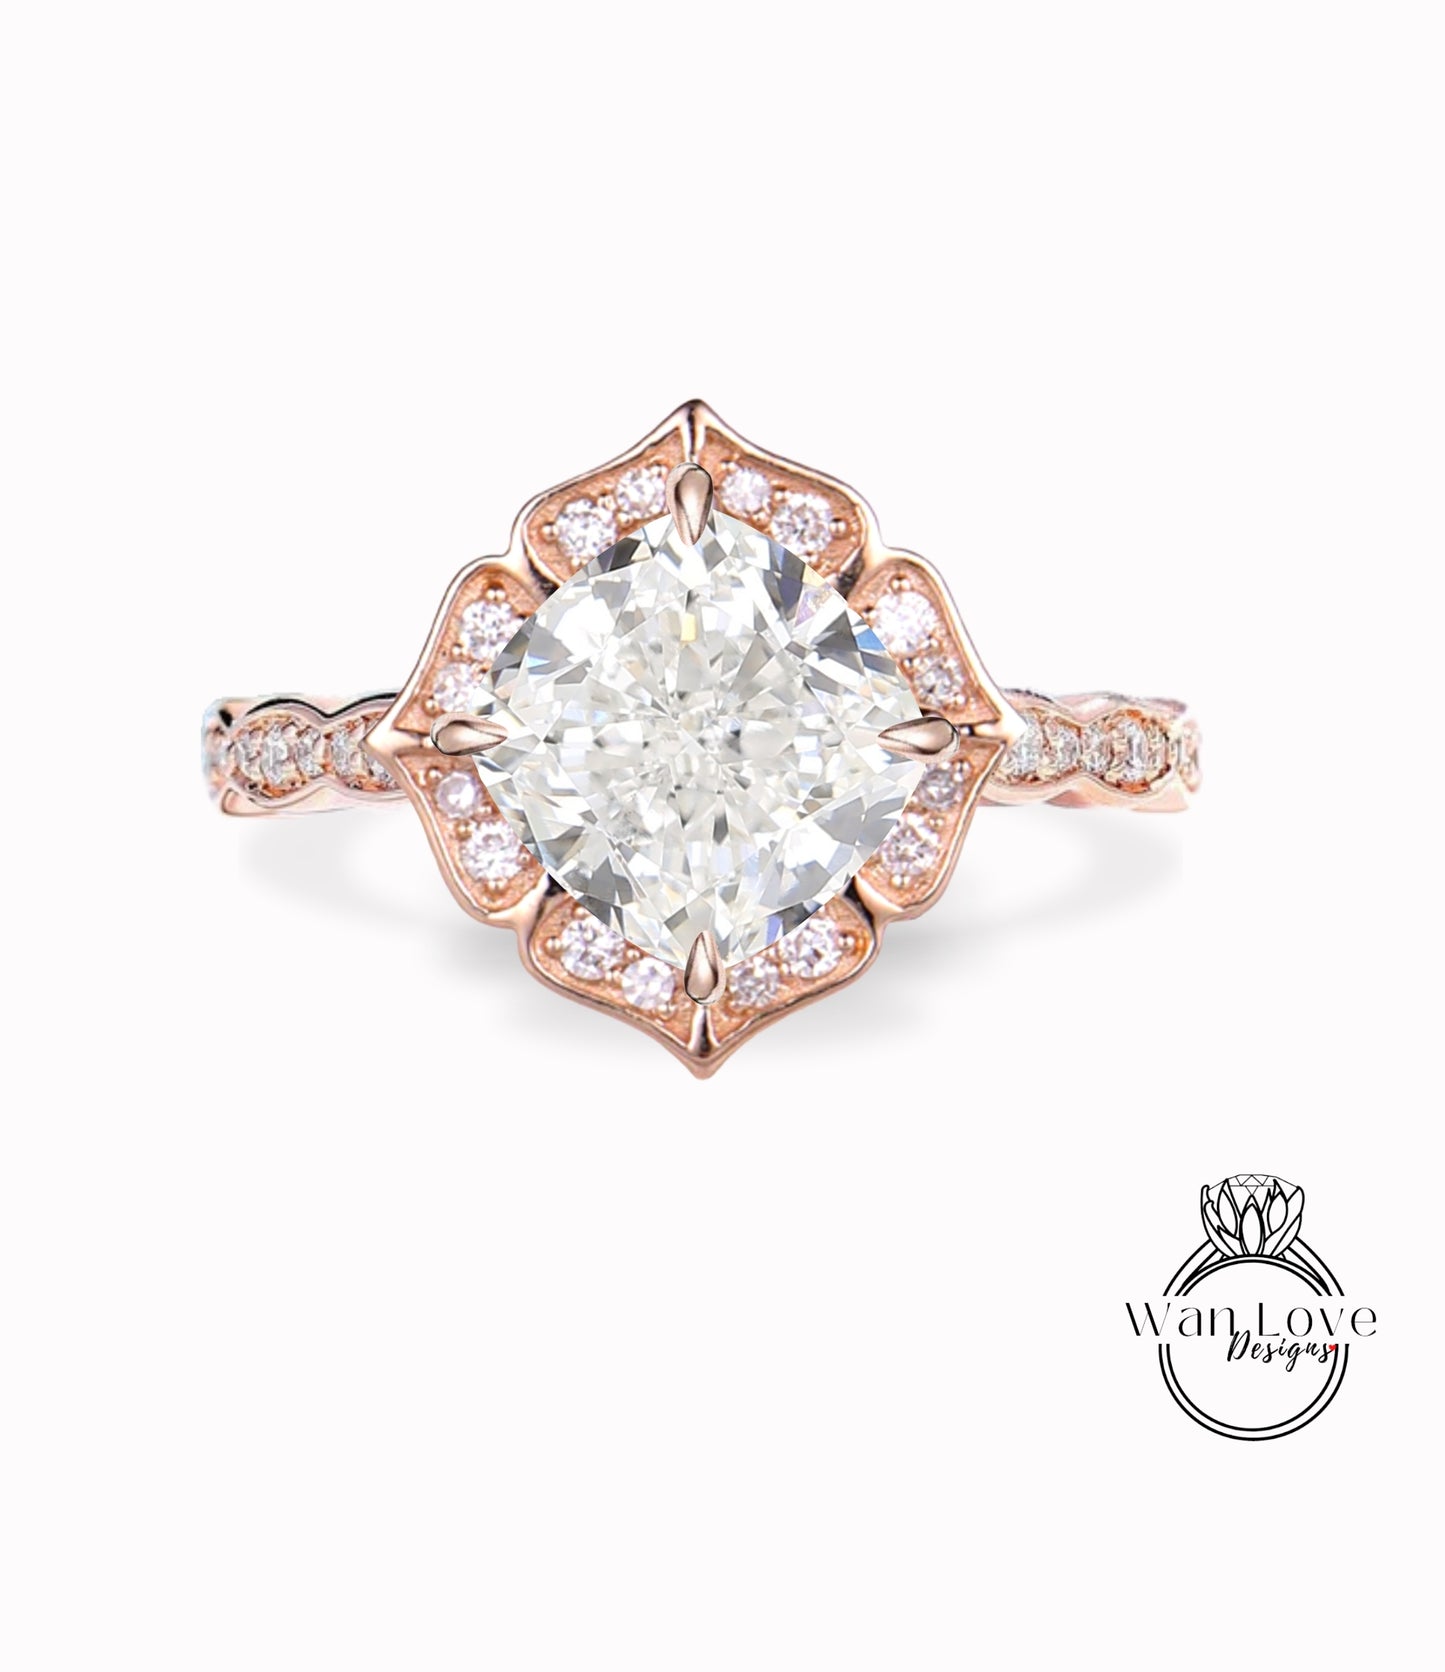 Vintage Diamond Engagement Ring Cushion Halo Floral Shaped Ring Antique milgrain scalloped diamond Wedding Bridal Ring Anniversary promise